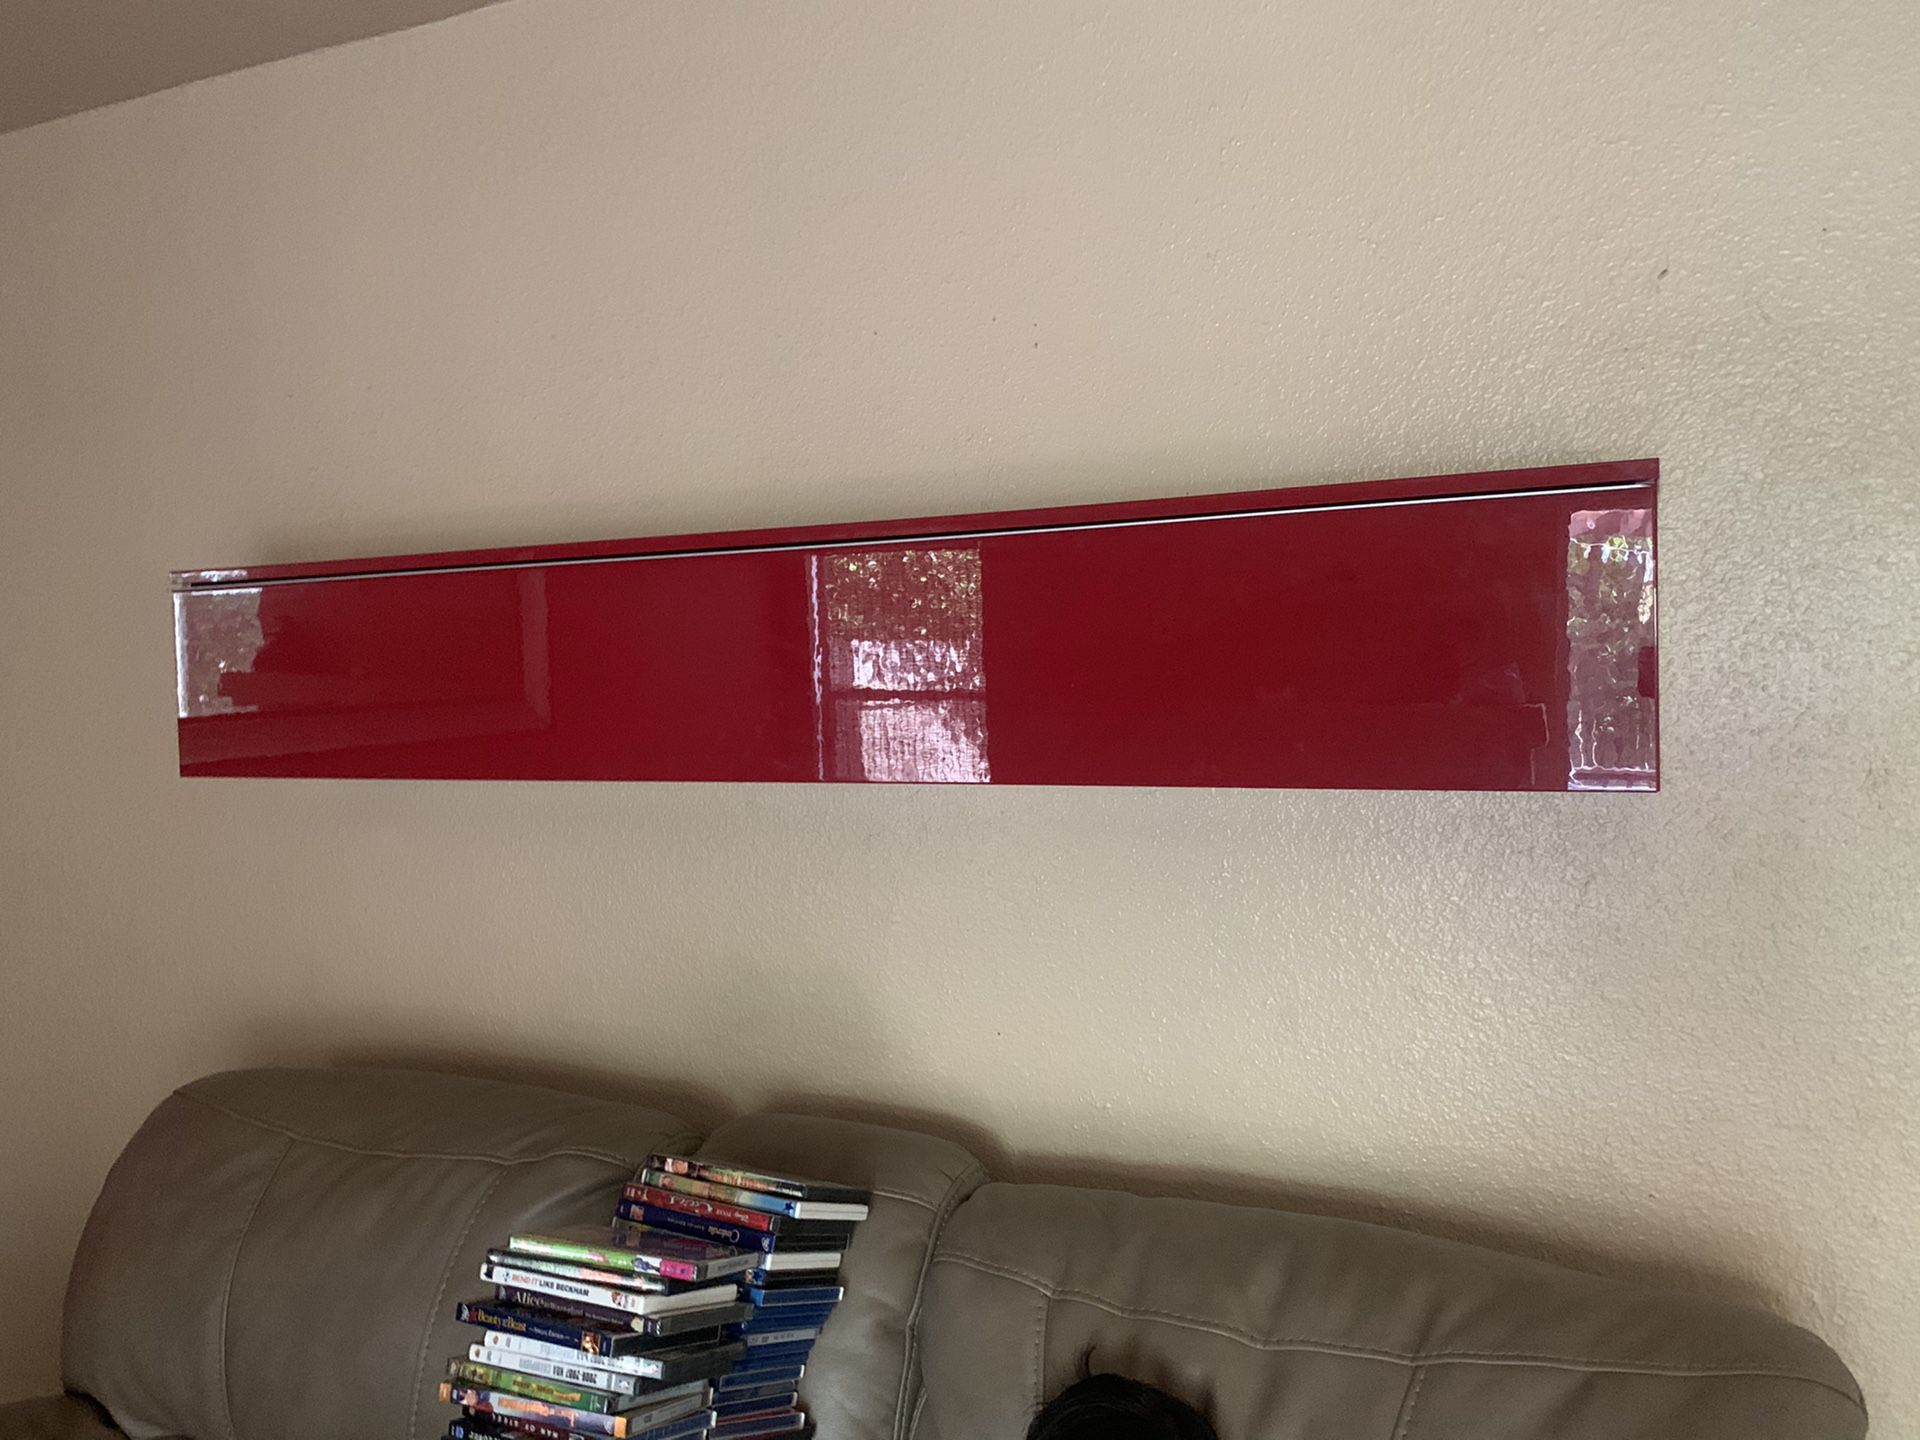 IKEA red wall storage